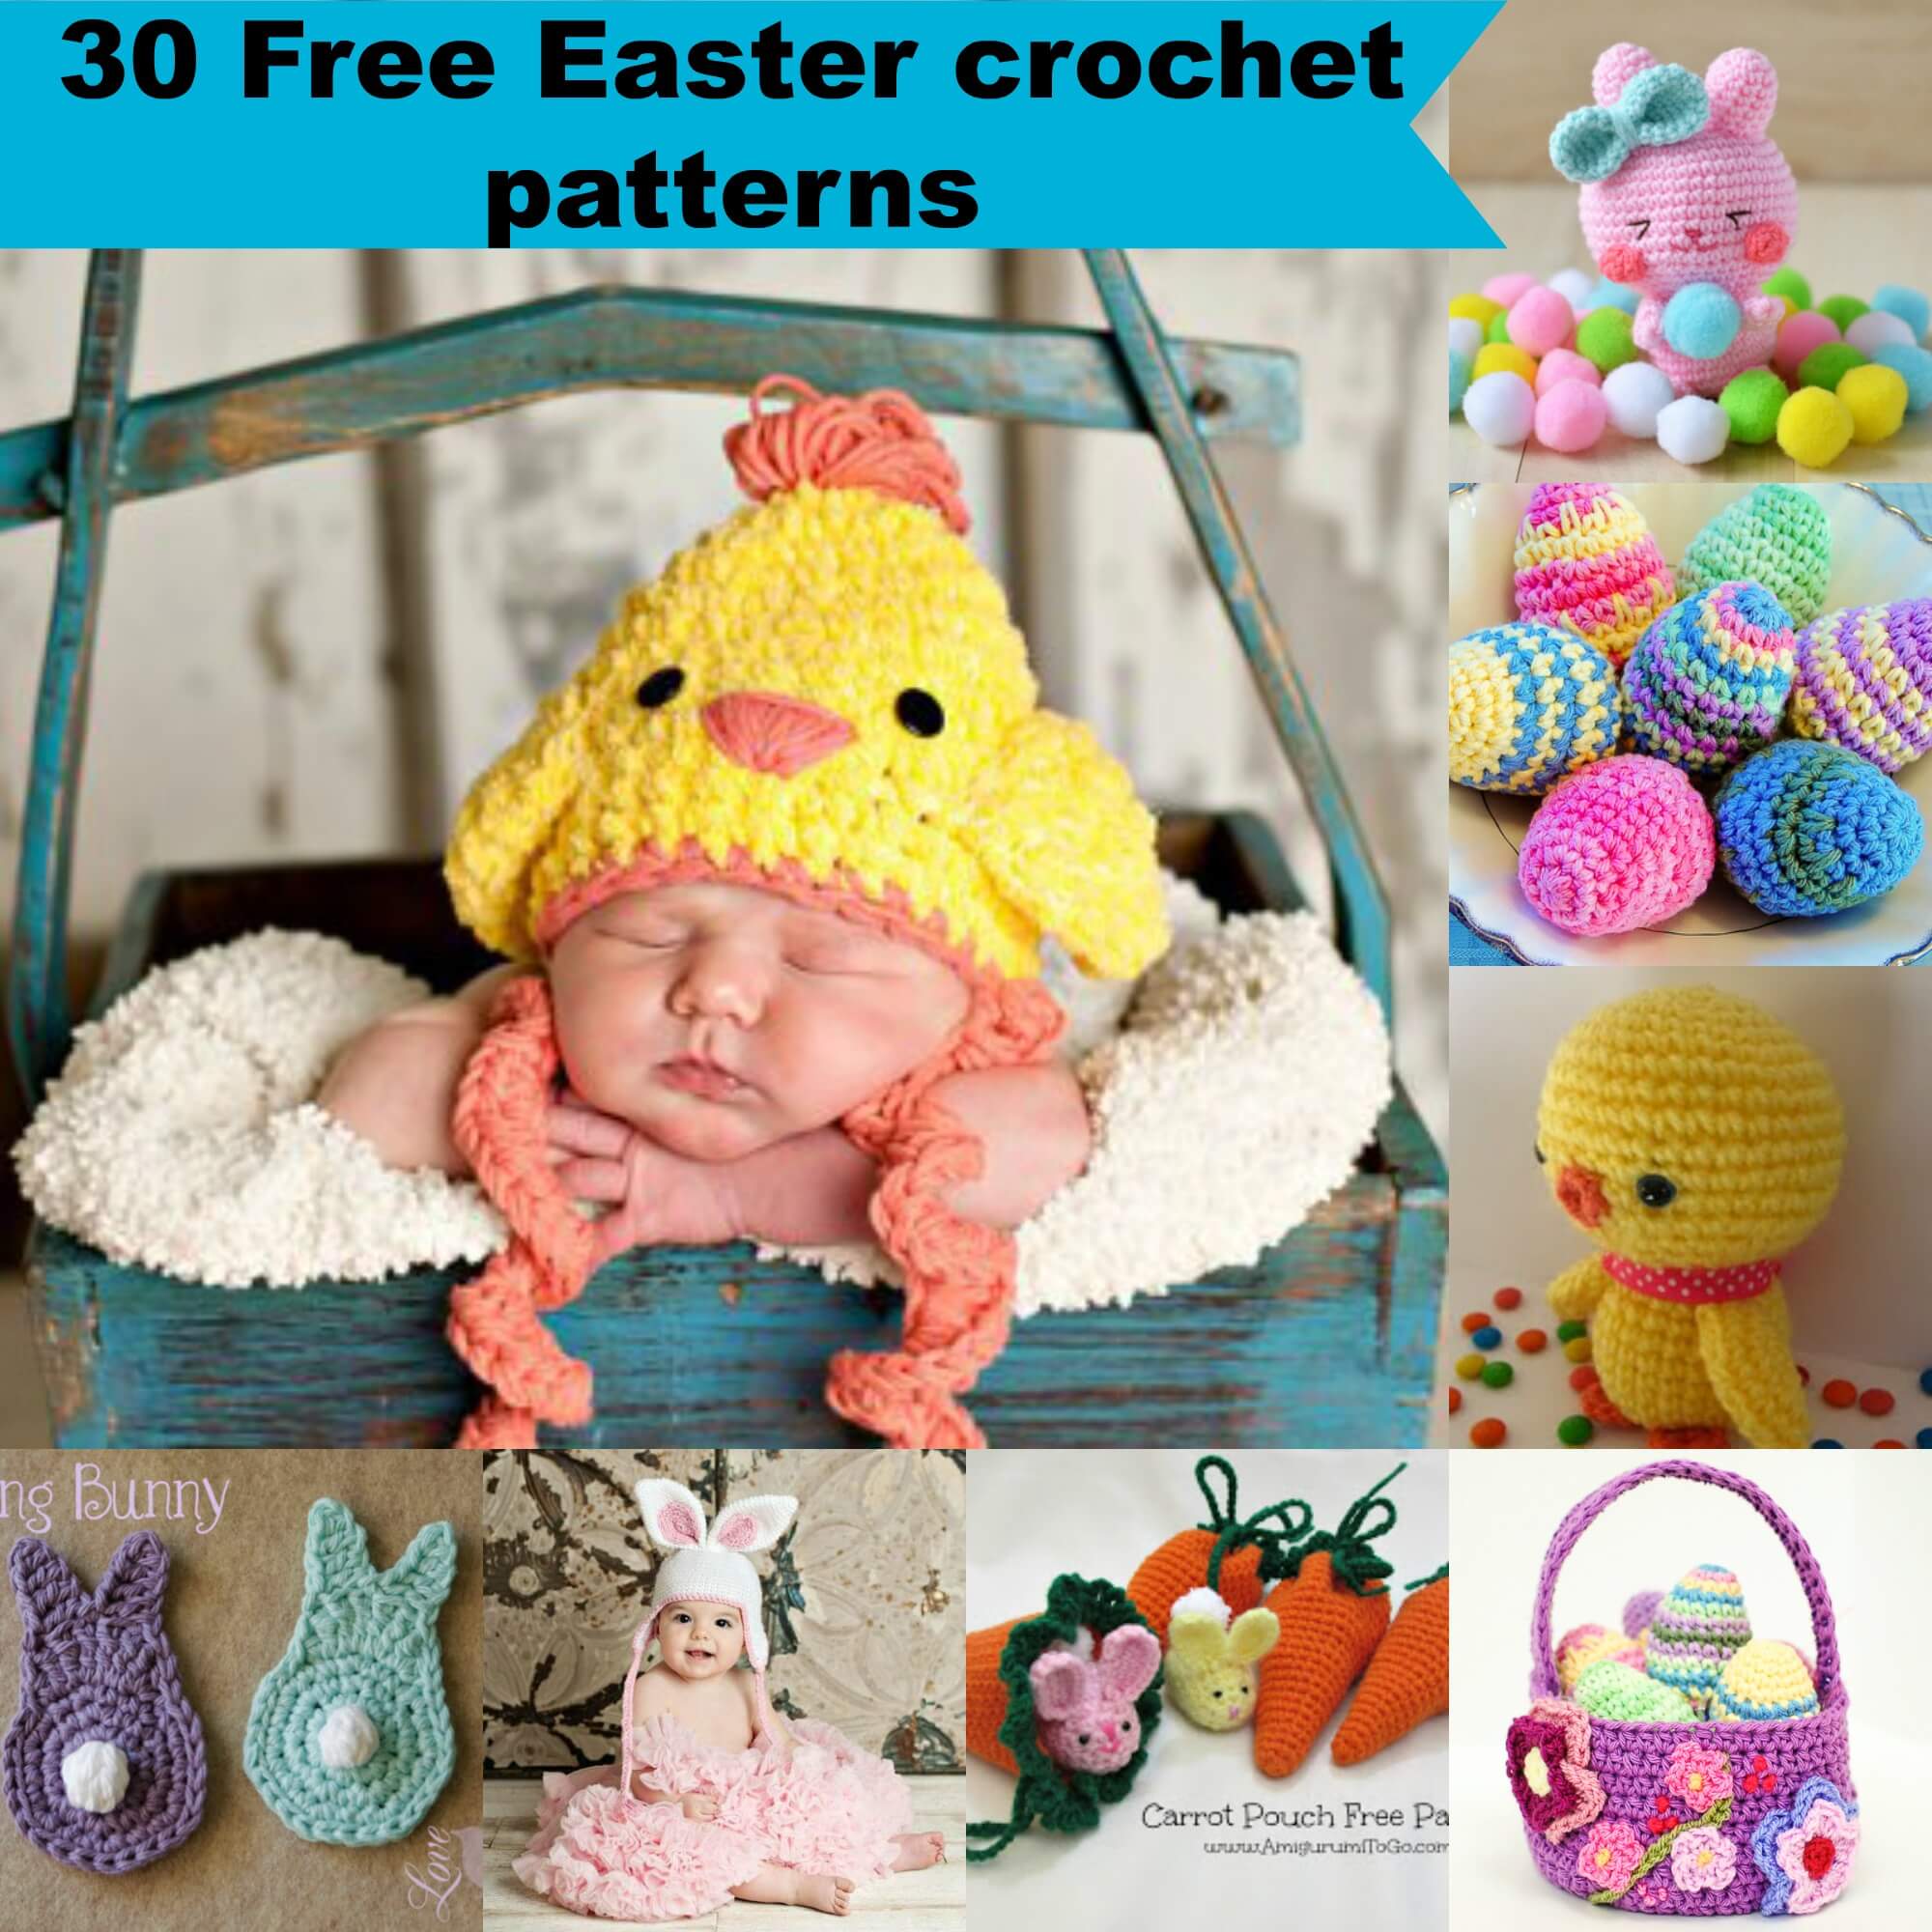 30 free easy Easter crochet patterns